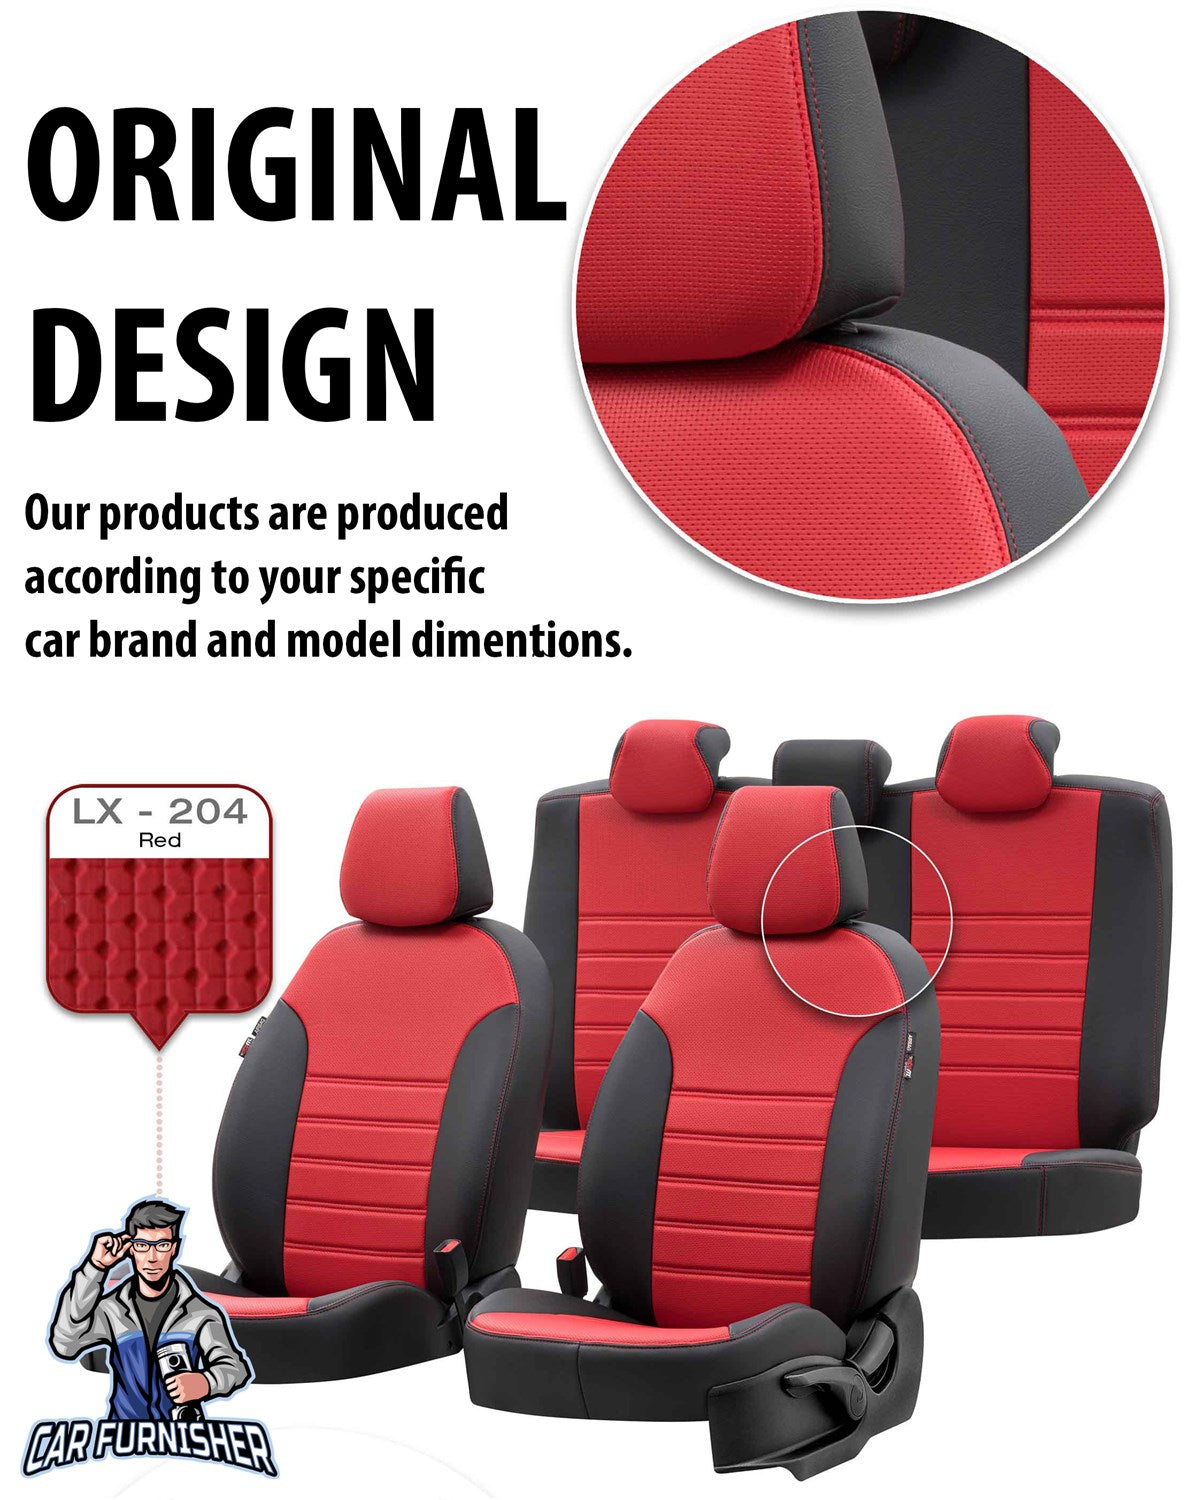 Daewoo Tacuma Seat Covers New York Leather Design Smoked Leather